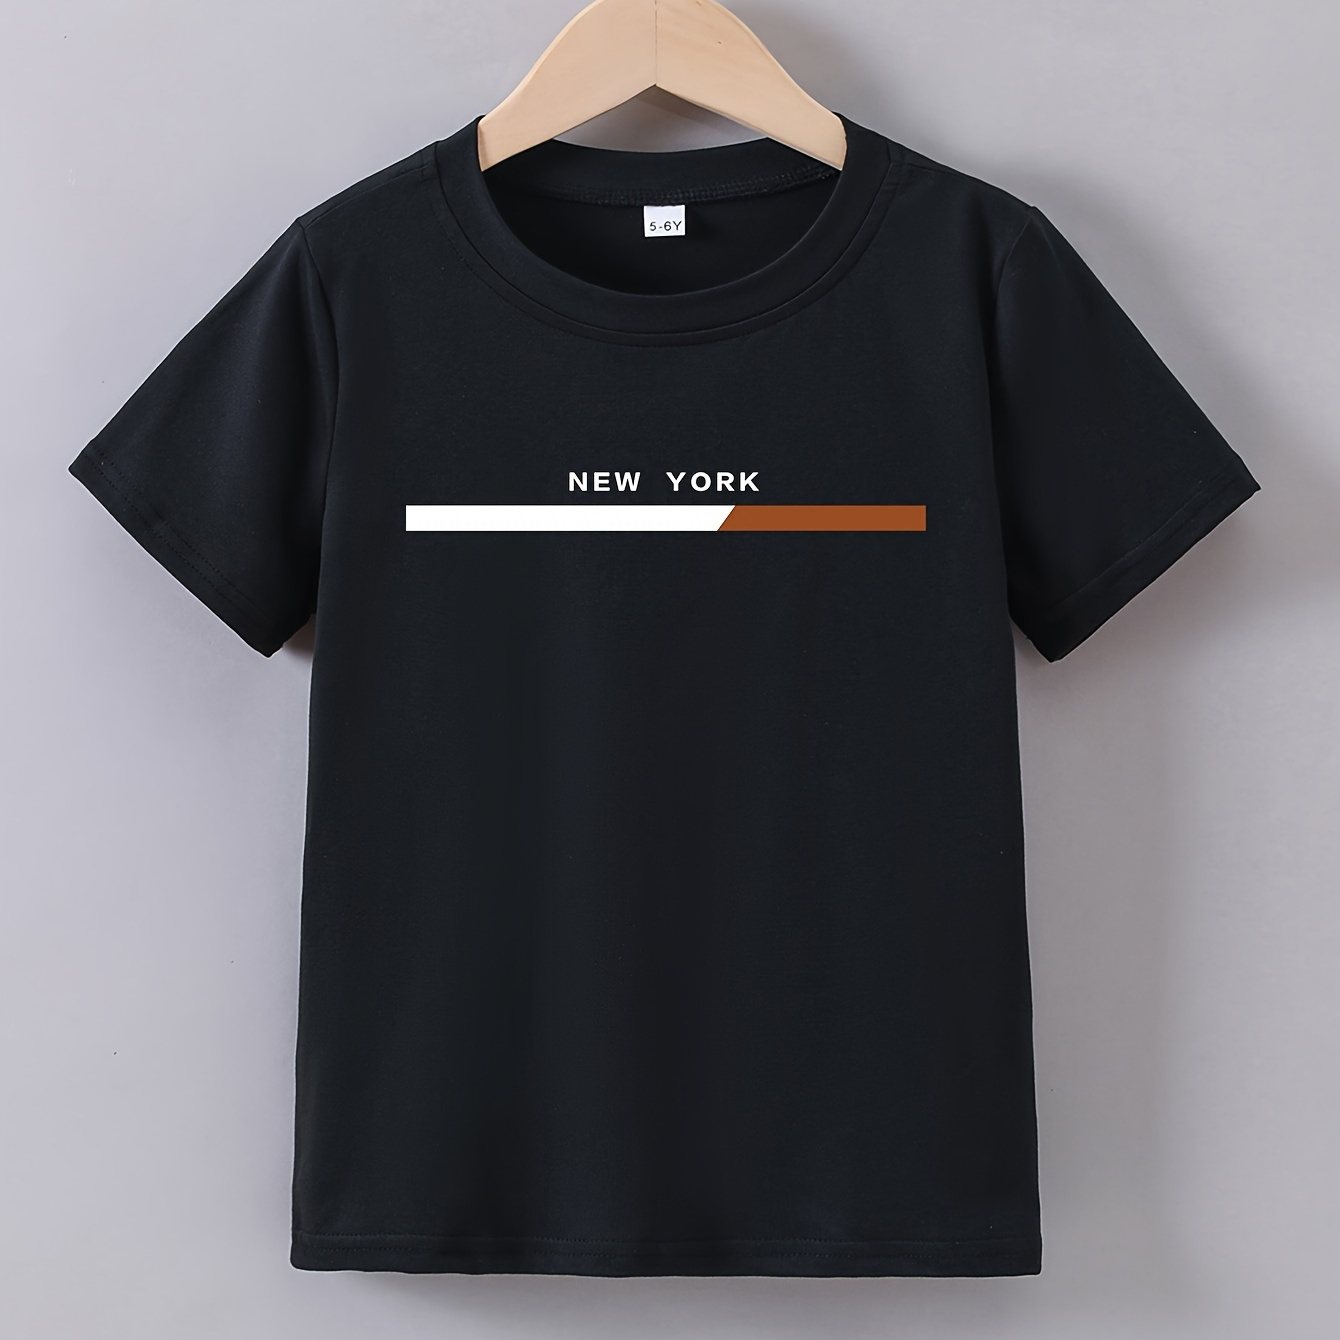 

Casual Comfy Boys' Summer Top - New York Simple Print Short Sleeve Crew Neck T-shirt - Cute tee Gift